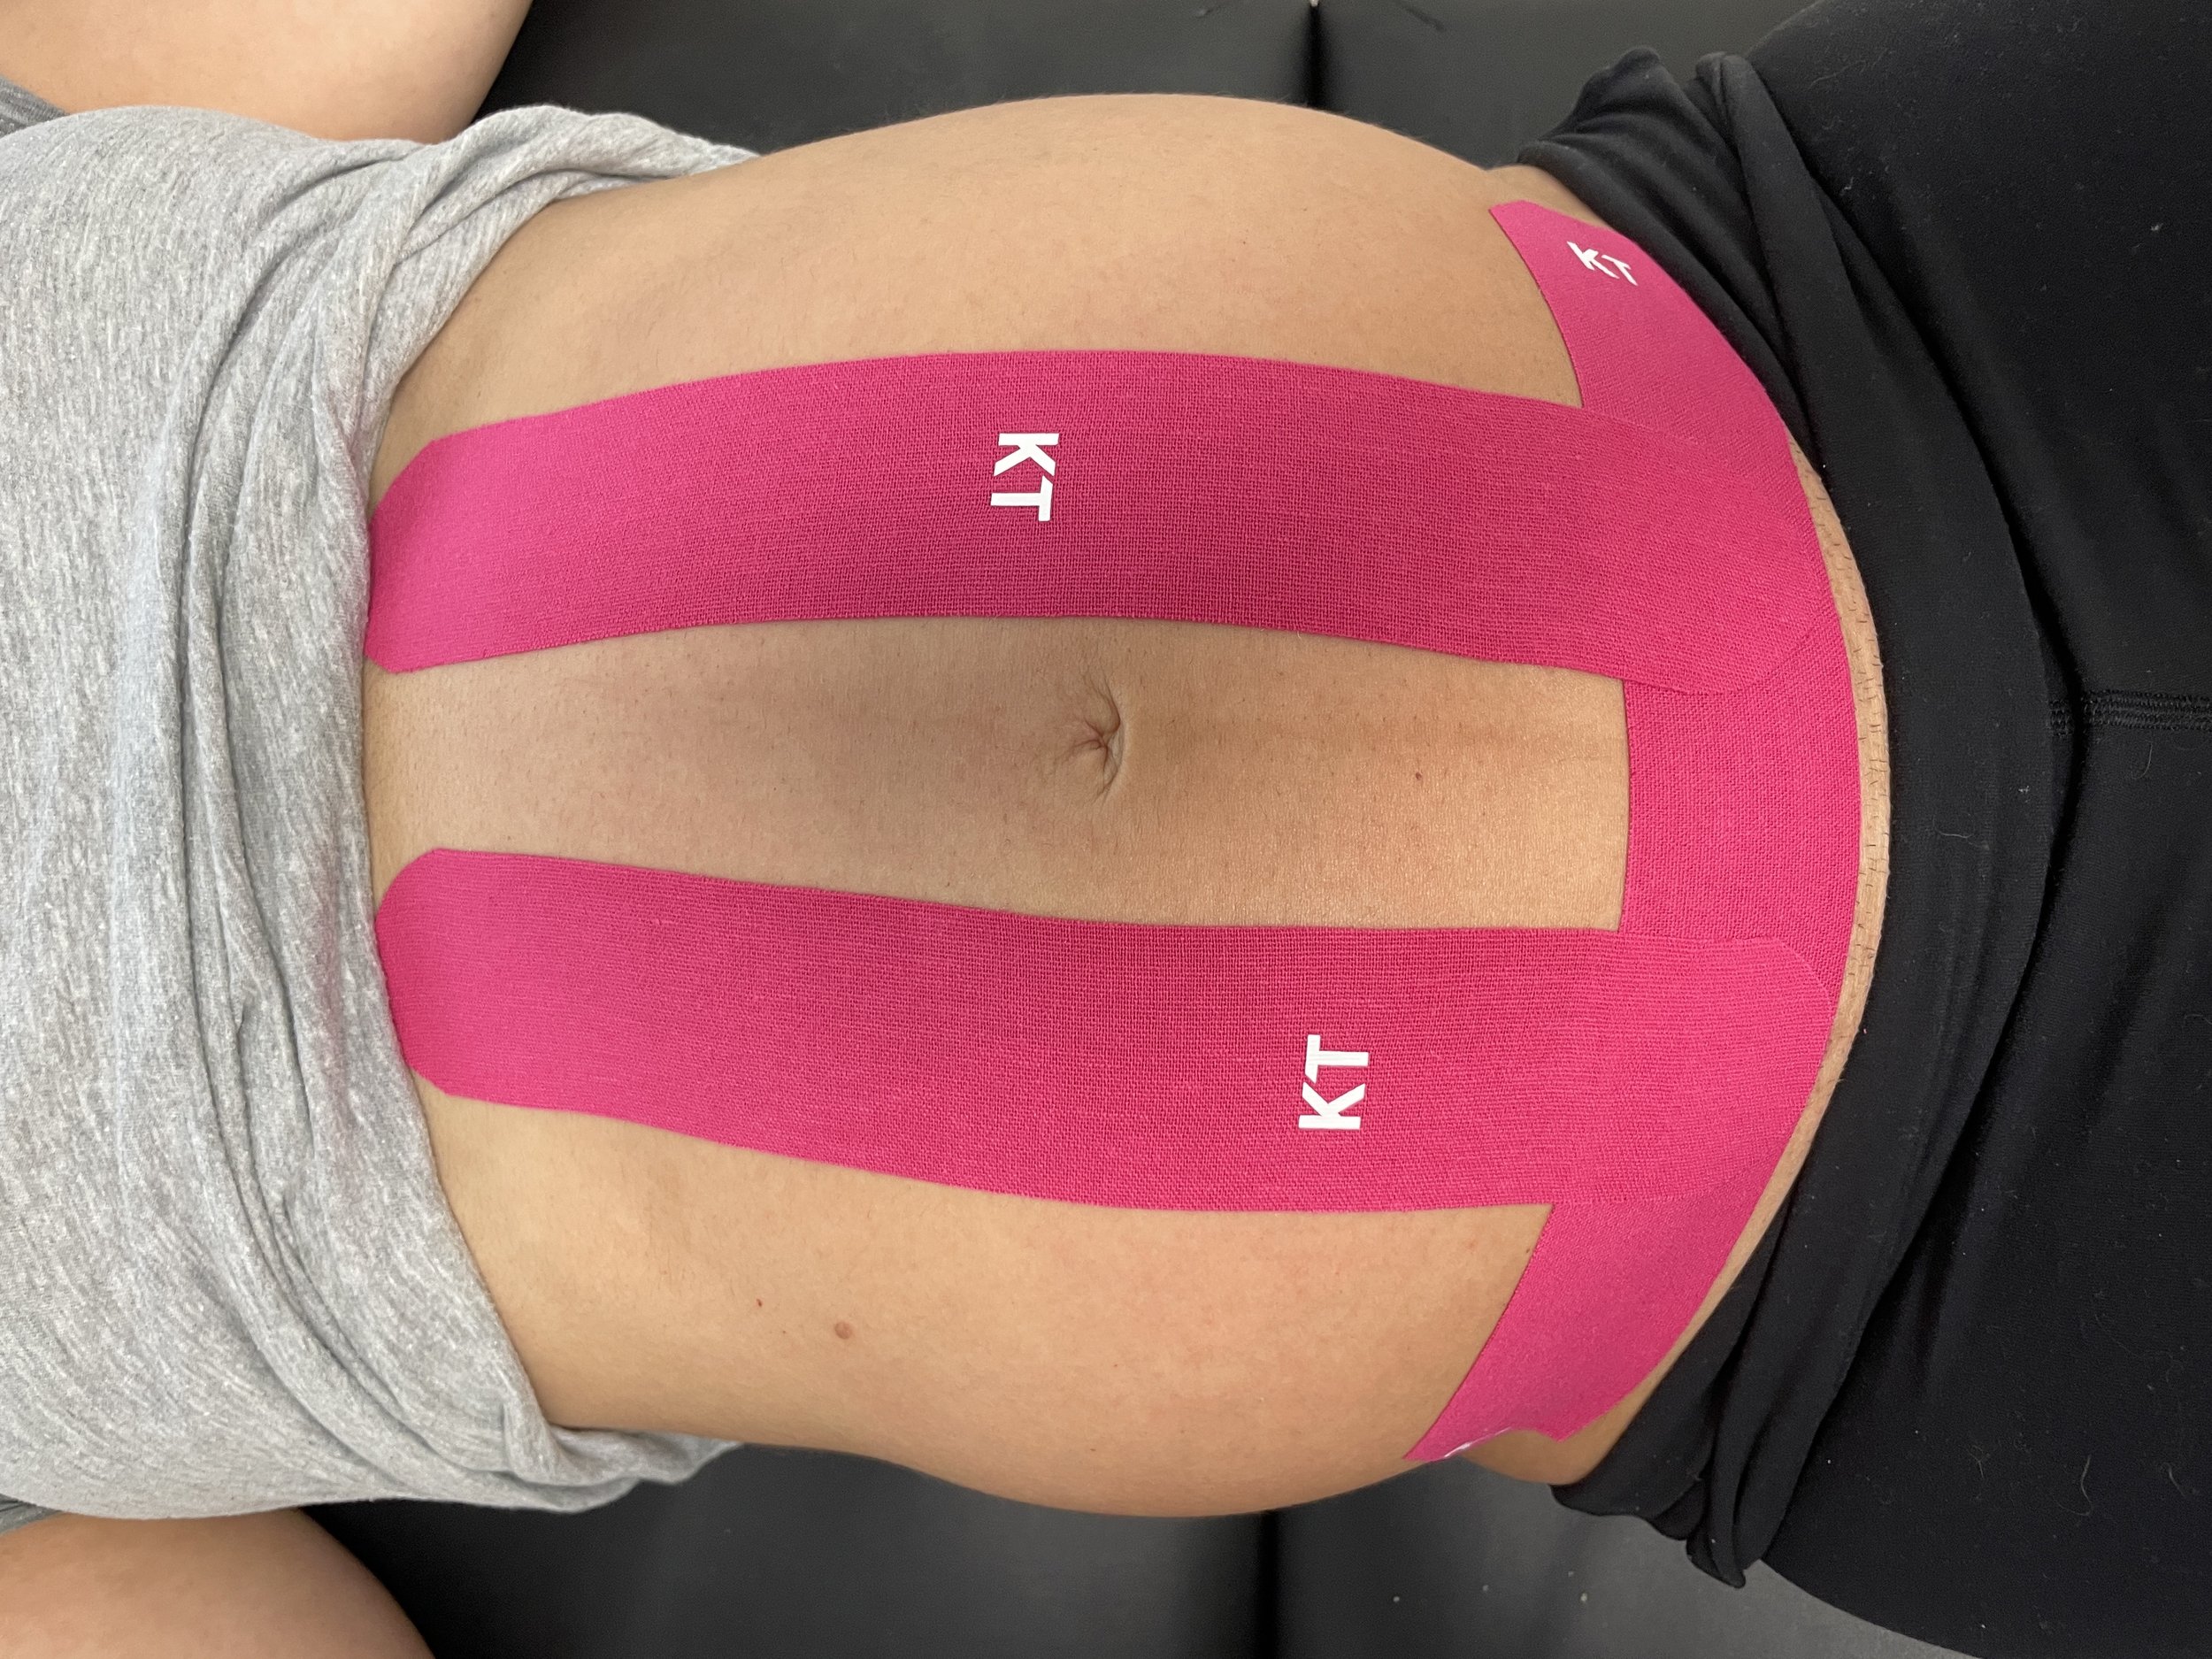 How Do I Kinesio Tape My Pregnant Belly? — Lady Bird PT